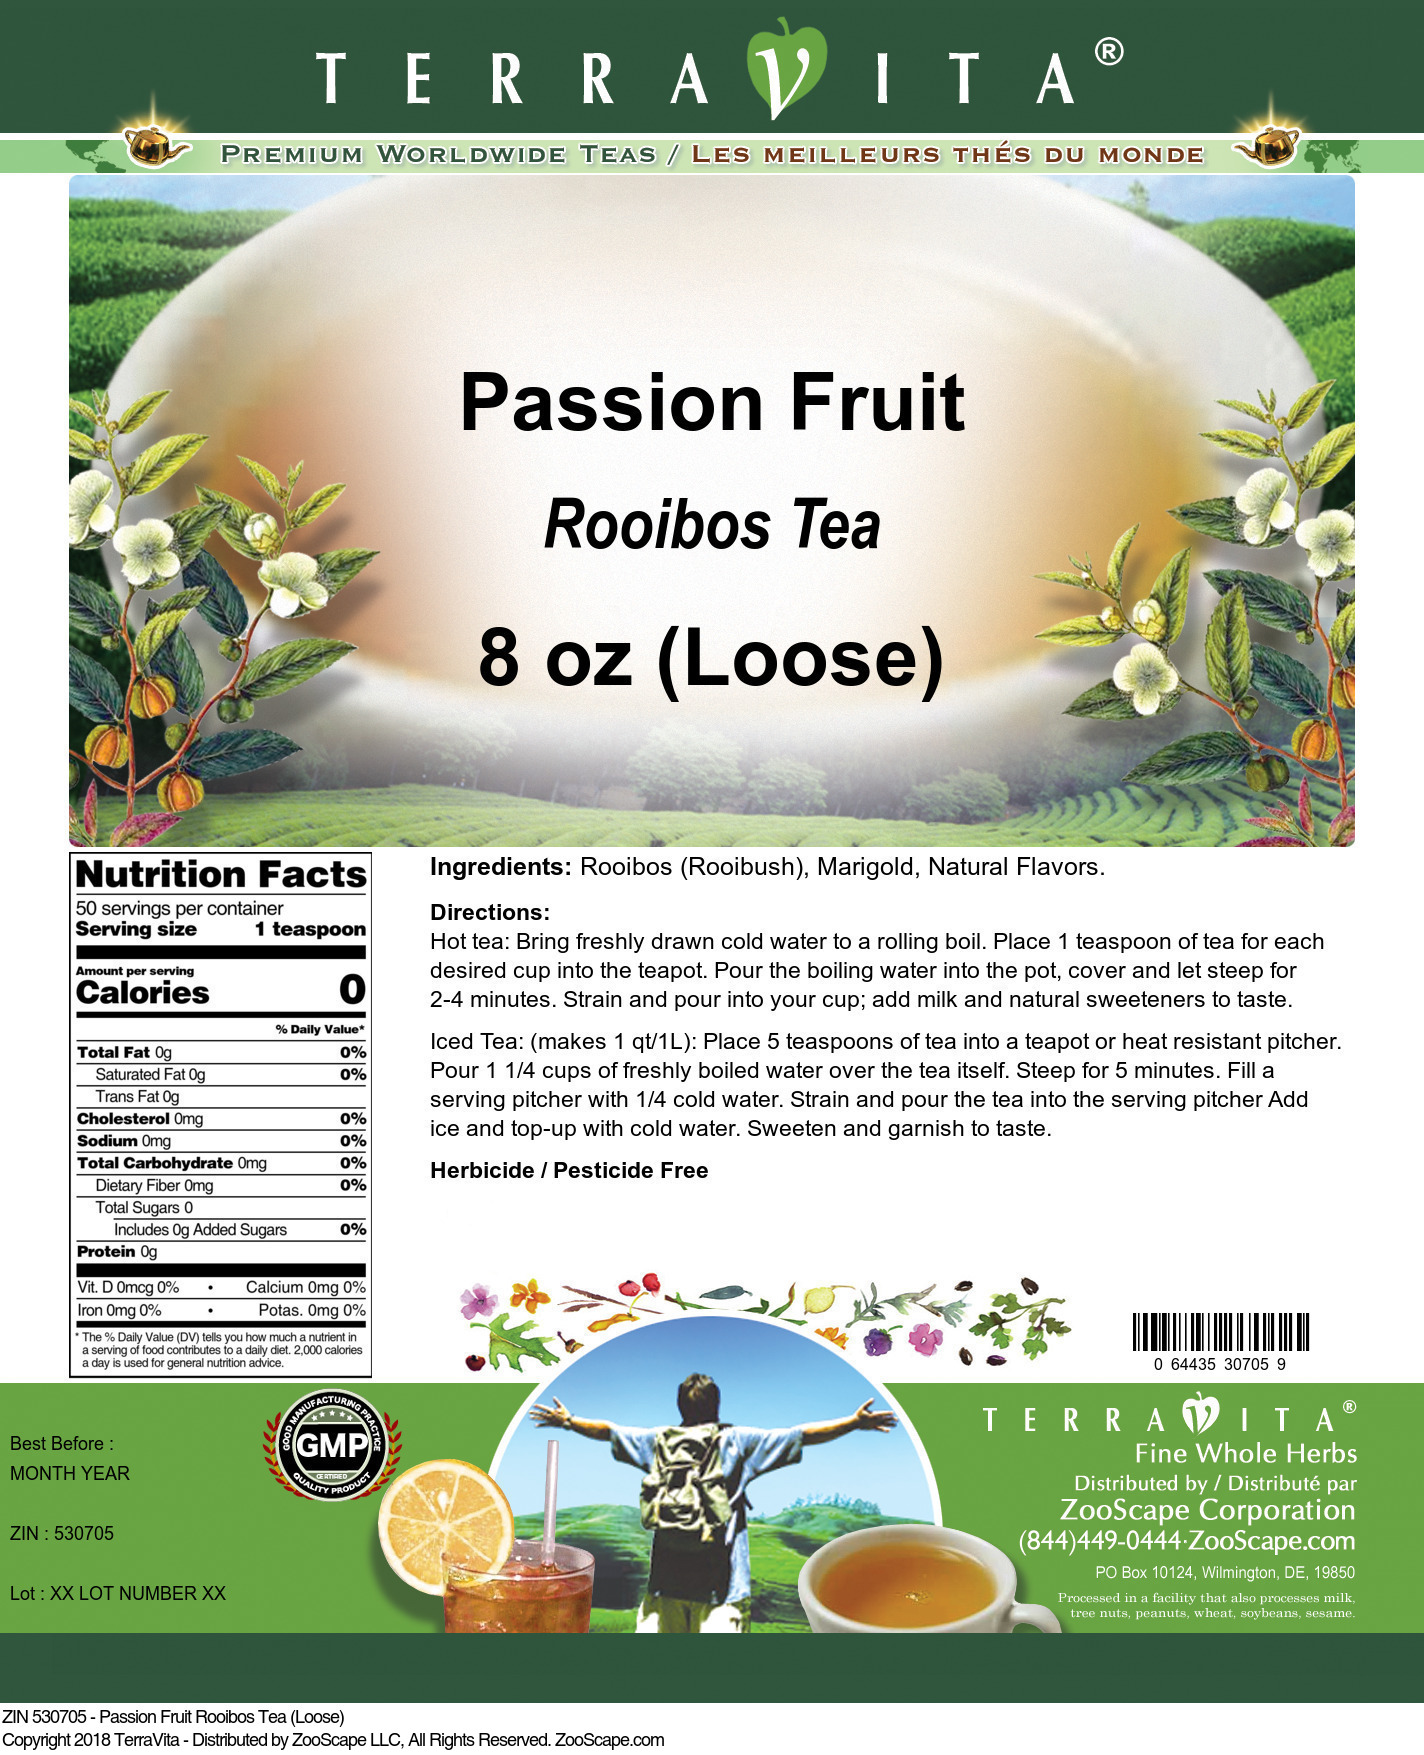 Passion Fruit Rooibos Tea (Loose) - Label